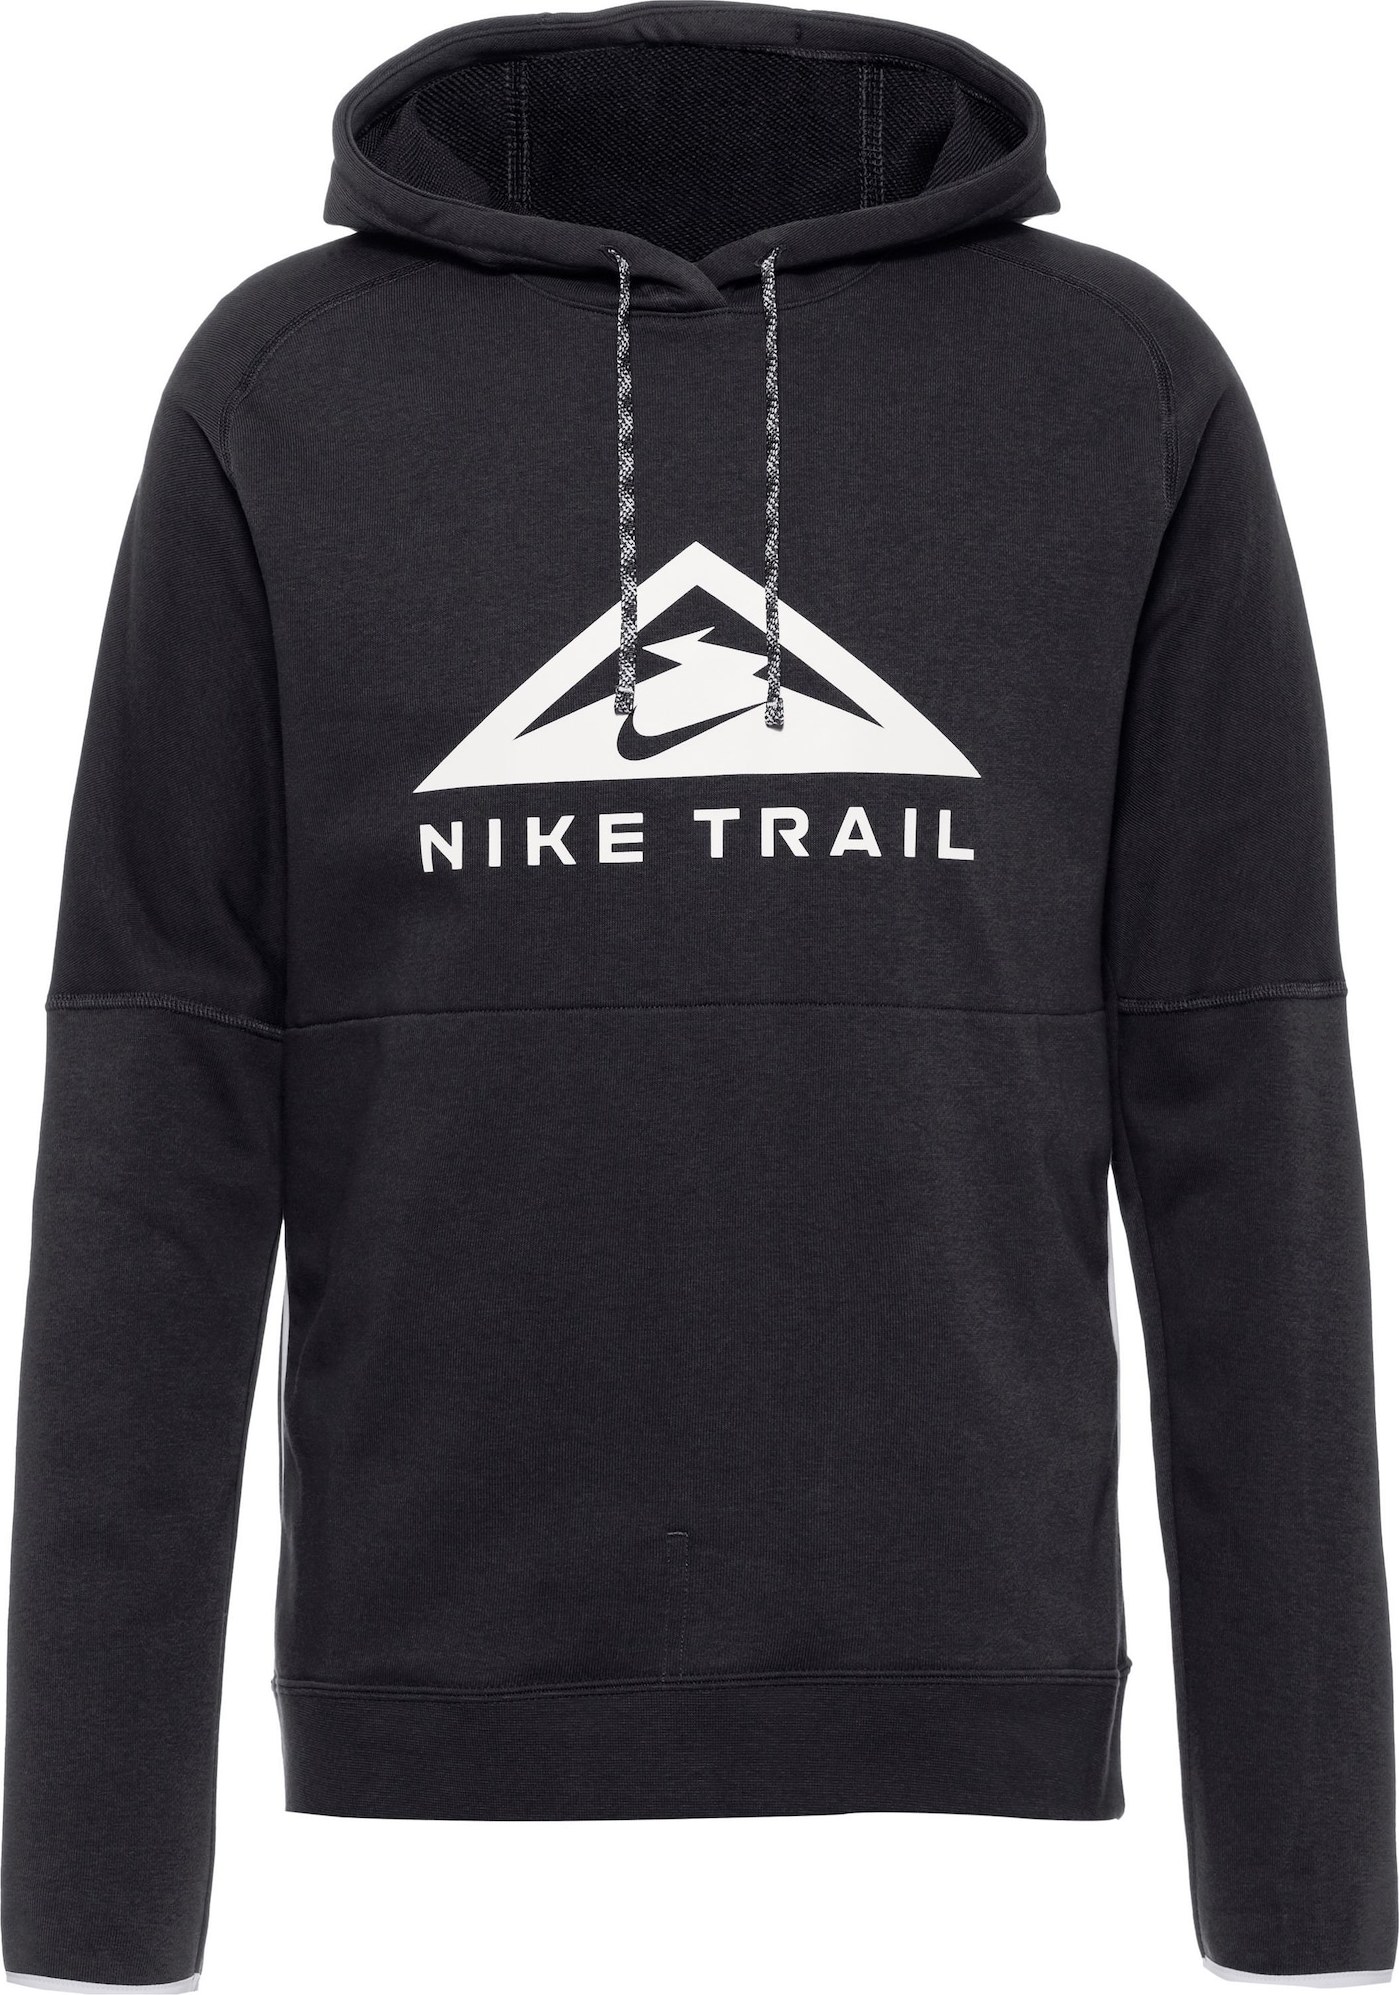 Sportovní mikina 'DF Trail' Nike černá / bílá